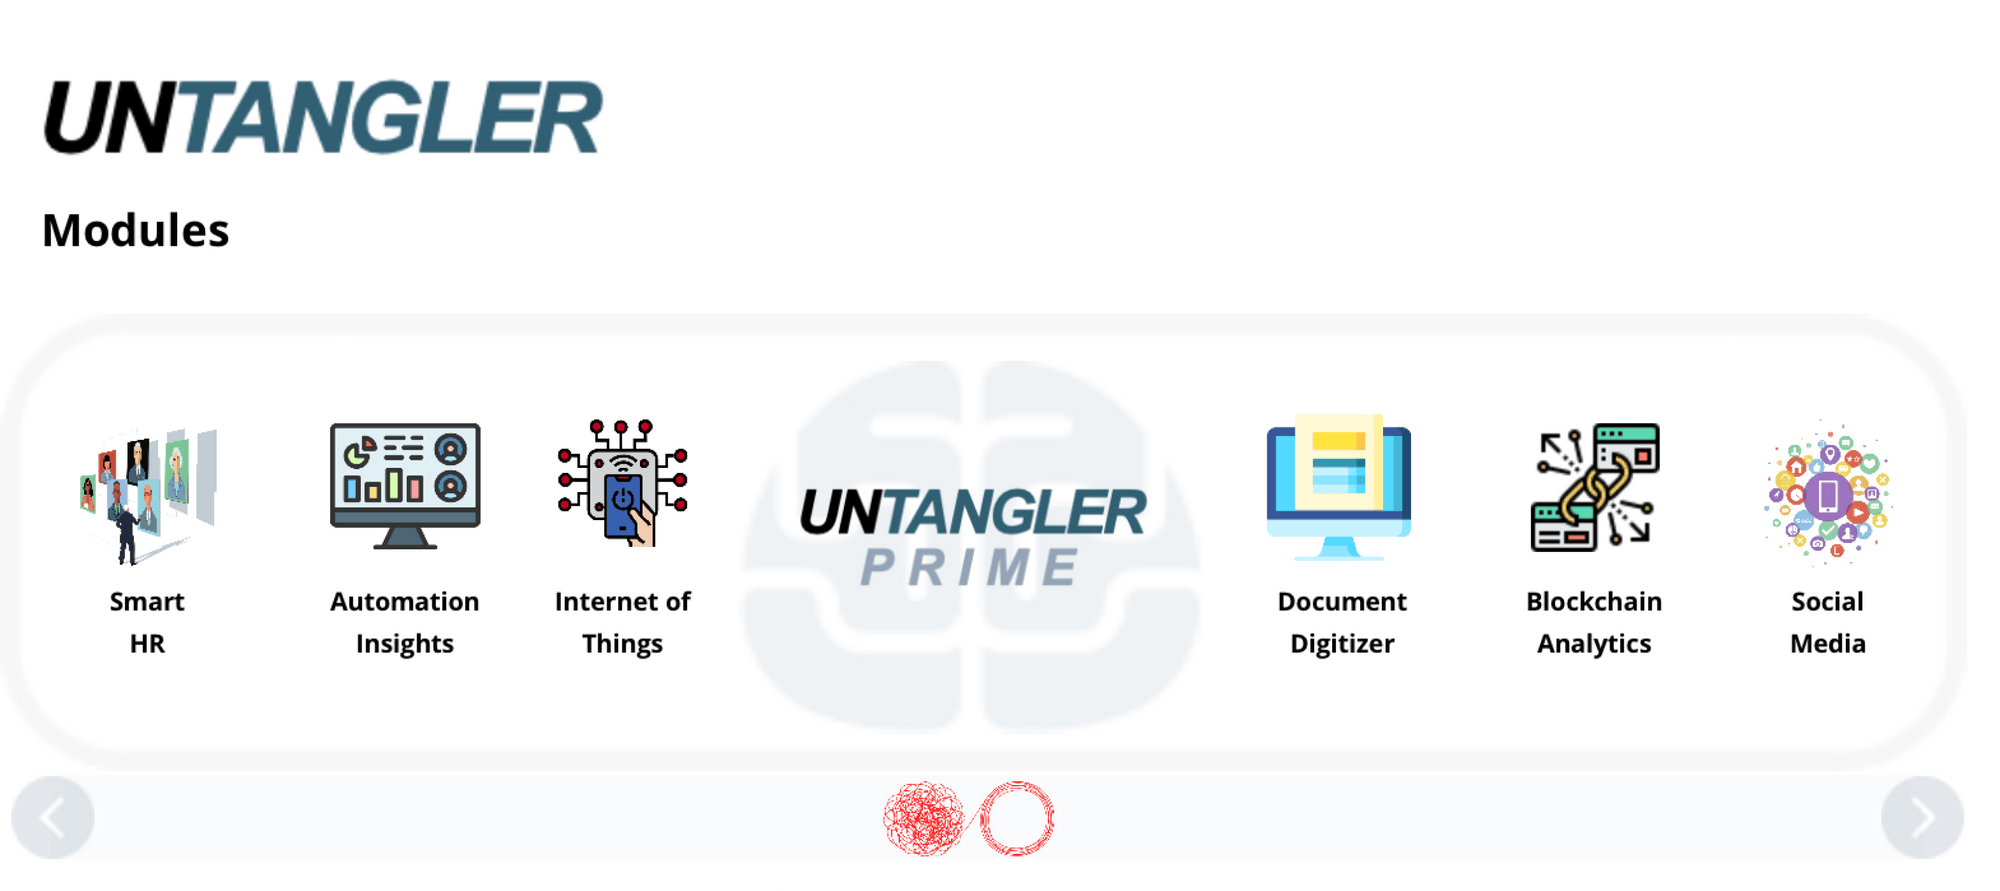 modules_untangler.png